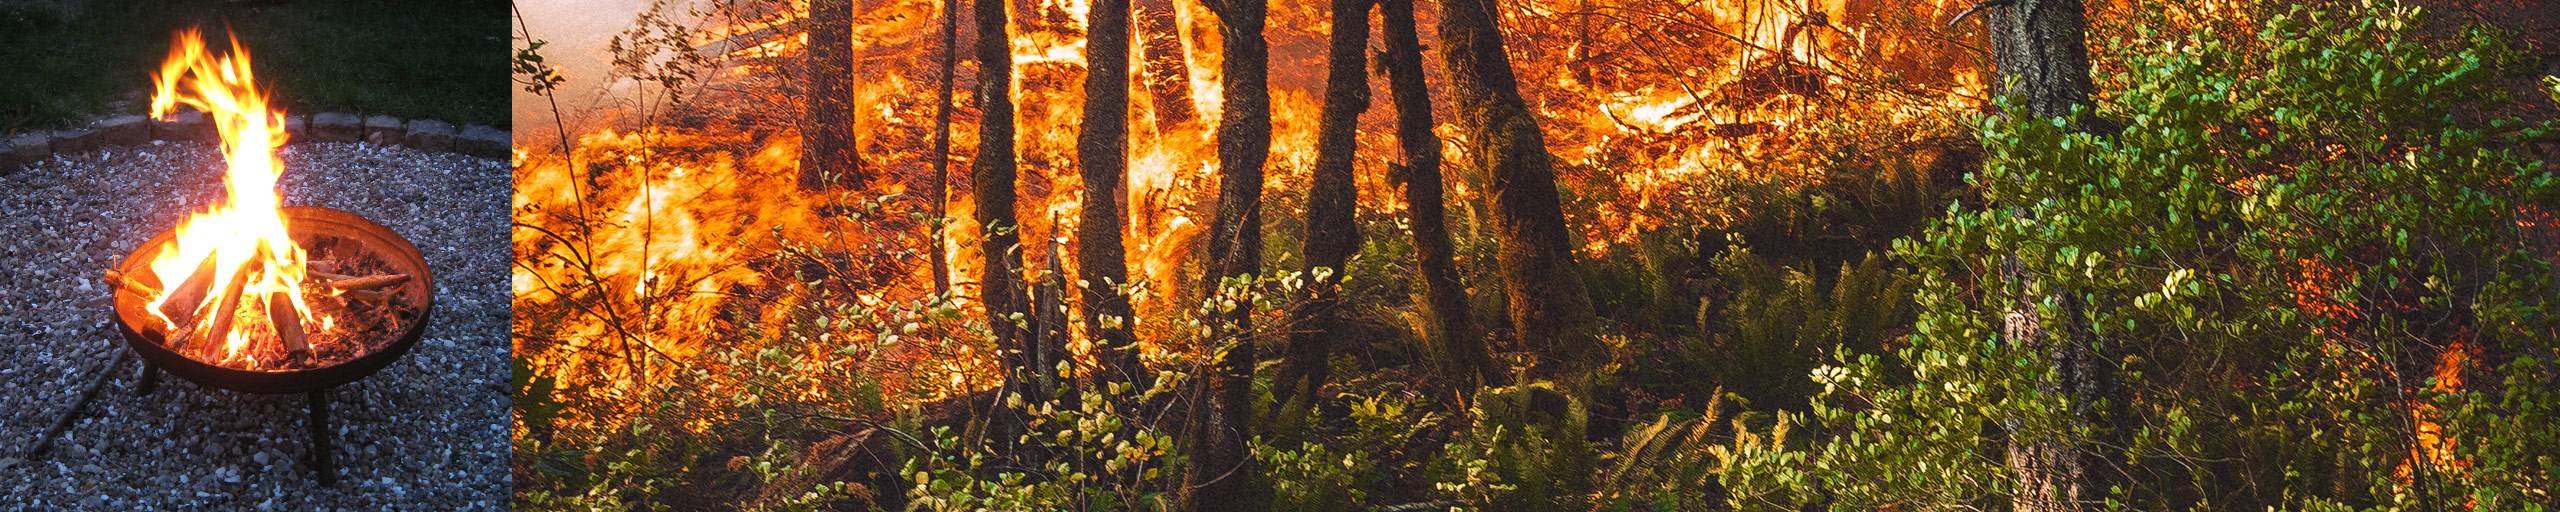 campfire and destructive wildfire